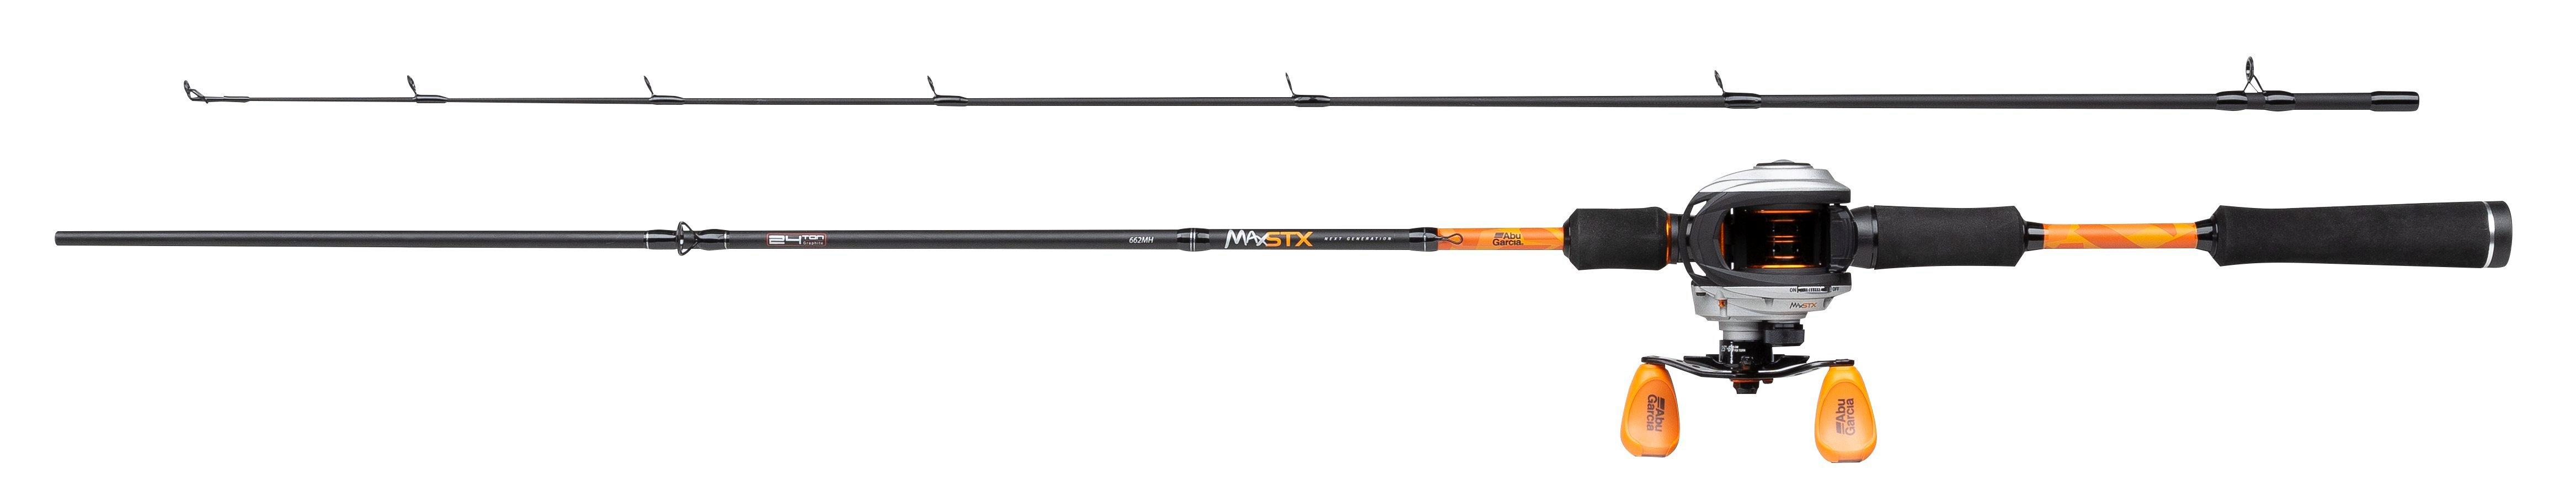 Abu Garcia 7’ Max STX Fishing Rod and Reel Baitcast Combo